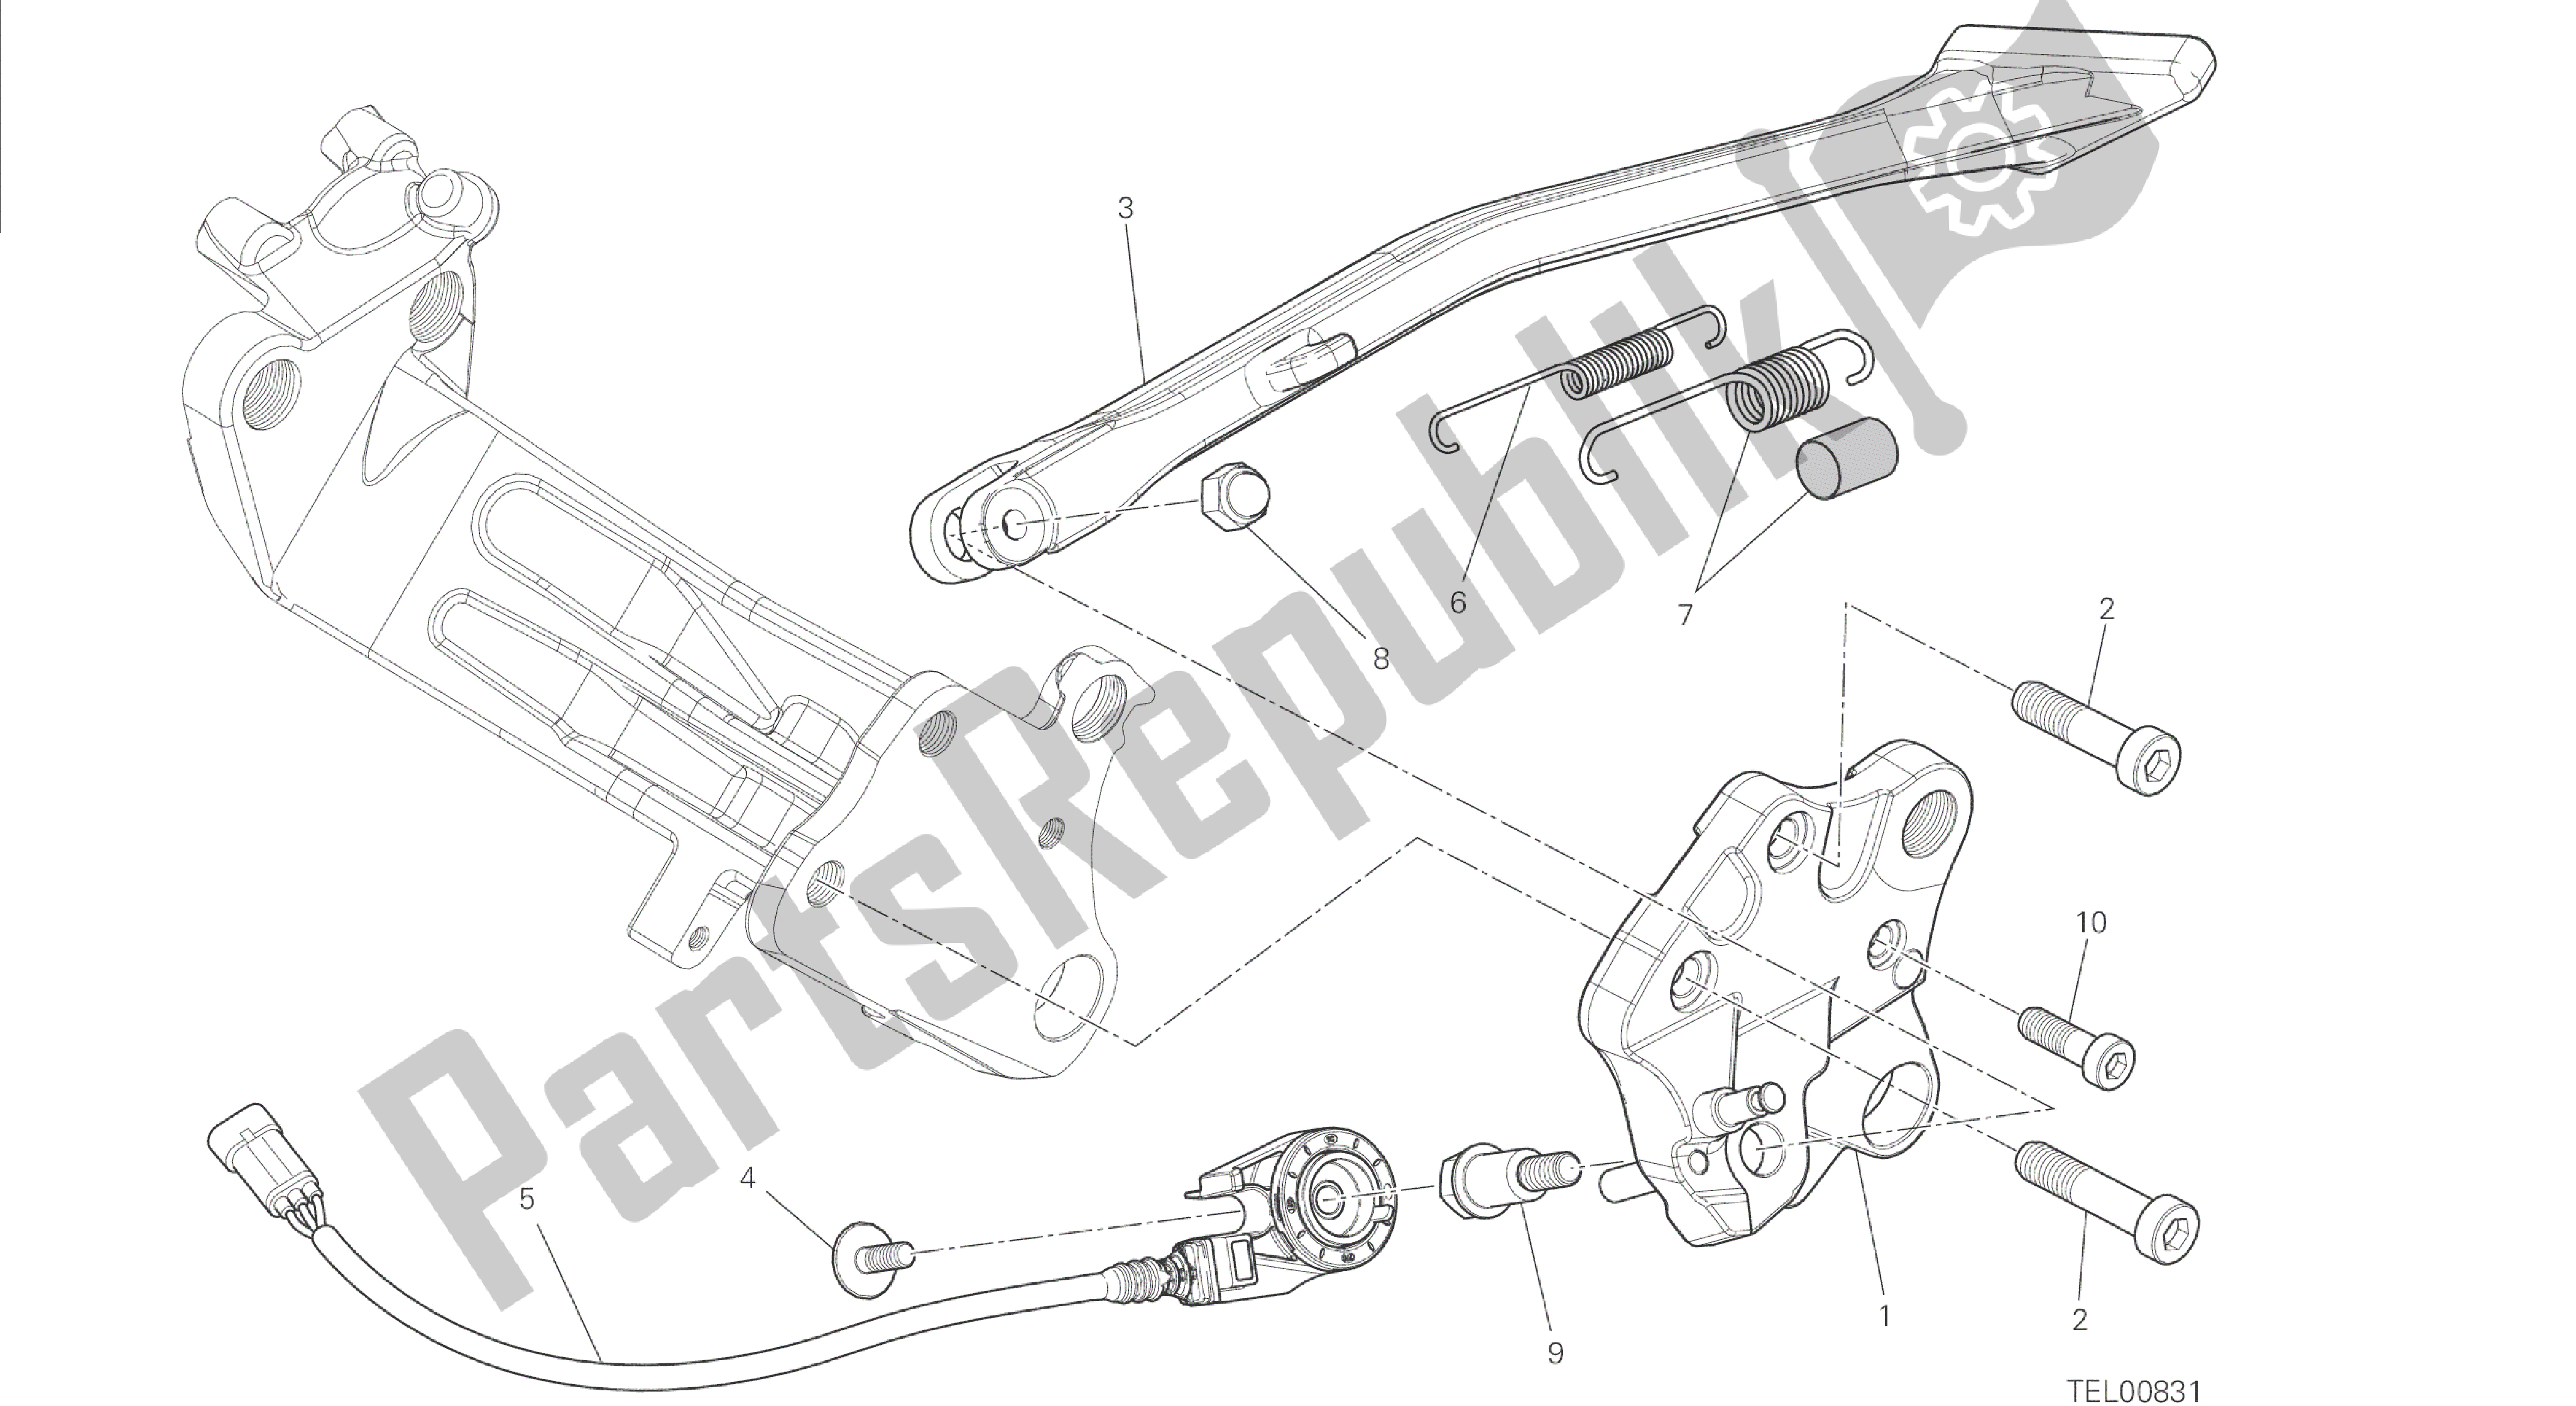 Todas las partes para Dibujo 22a - Bastidor De Grupo De Soporte Lateral [mod: Dvl] de Ducati Diavel 1200 2014